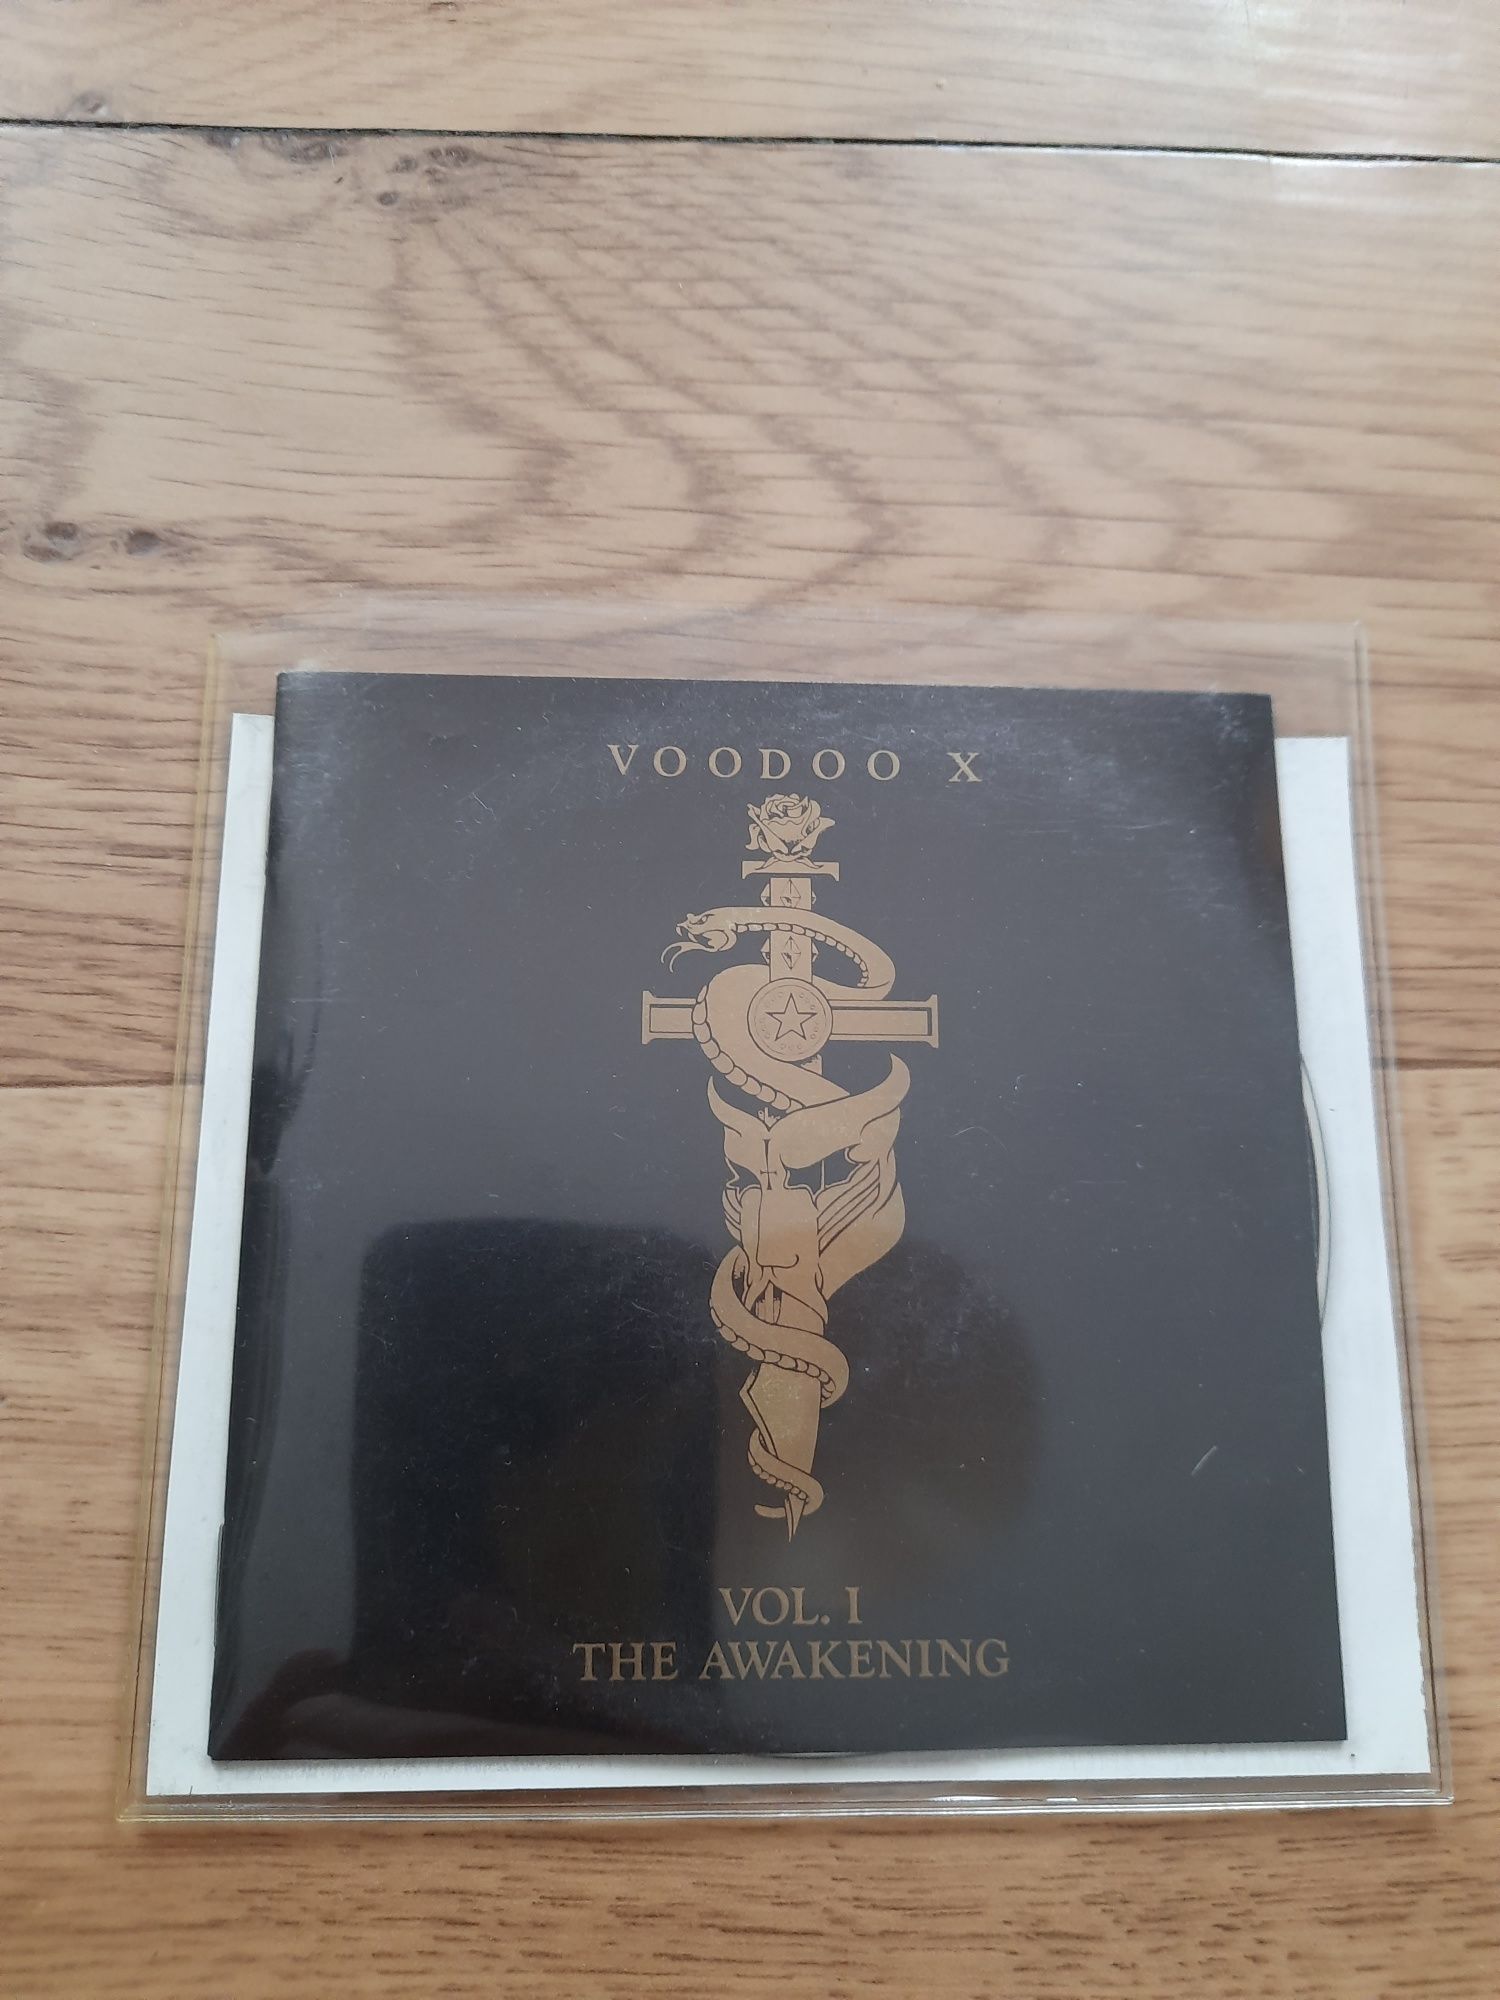 Voodoo X "Vol. I The Awakening"